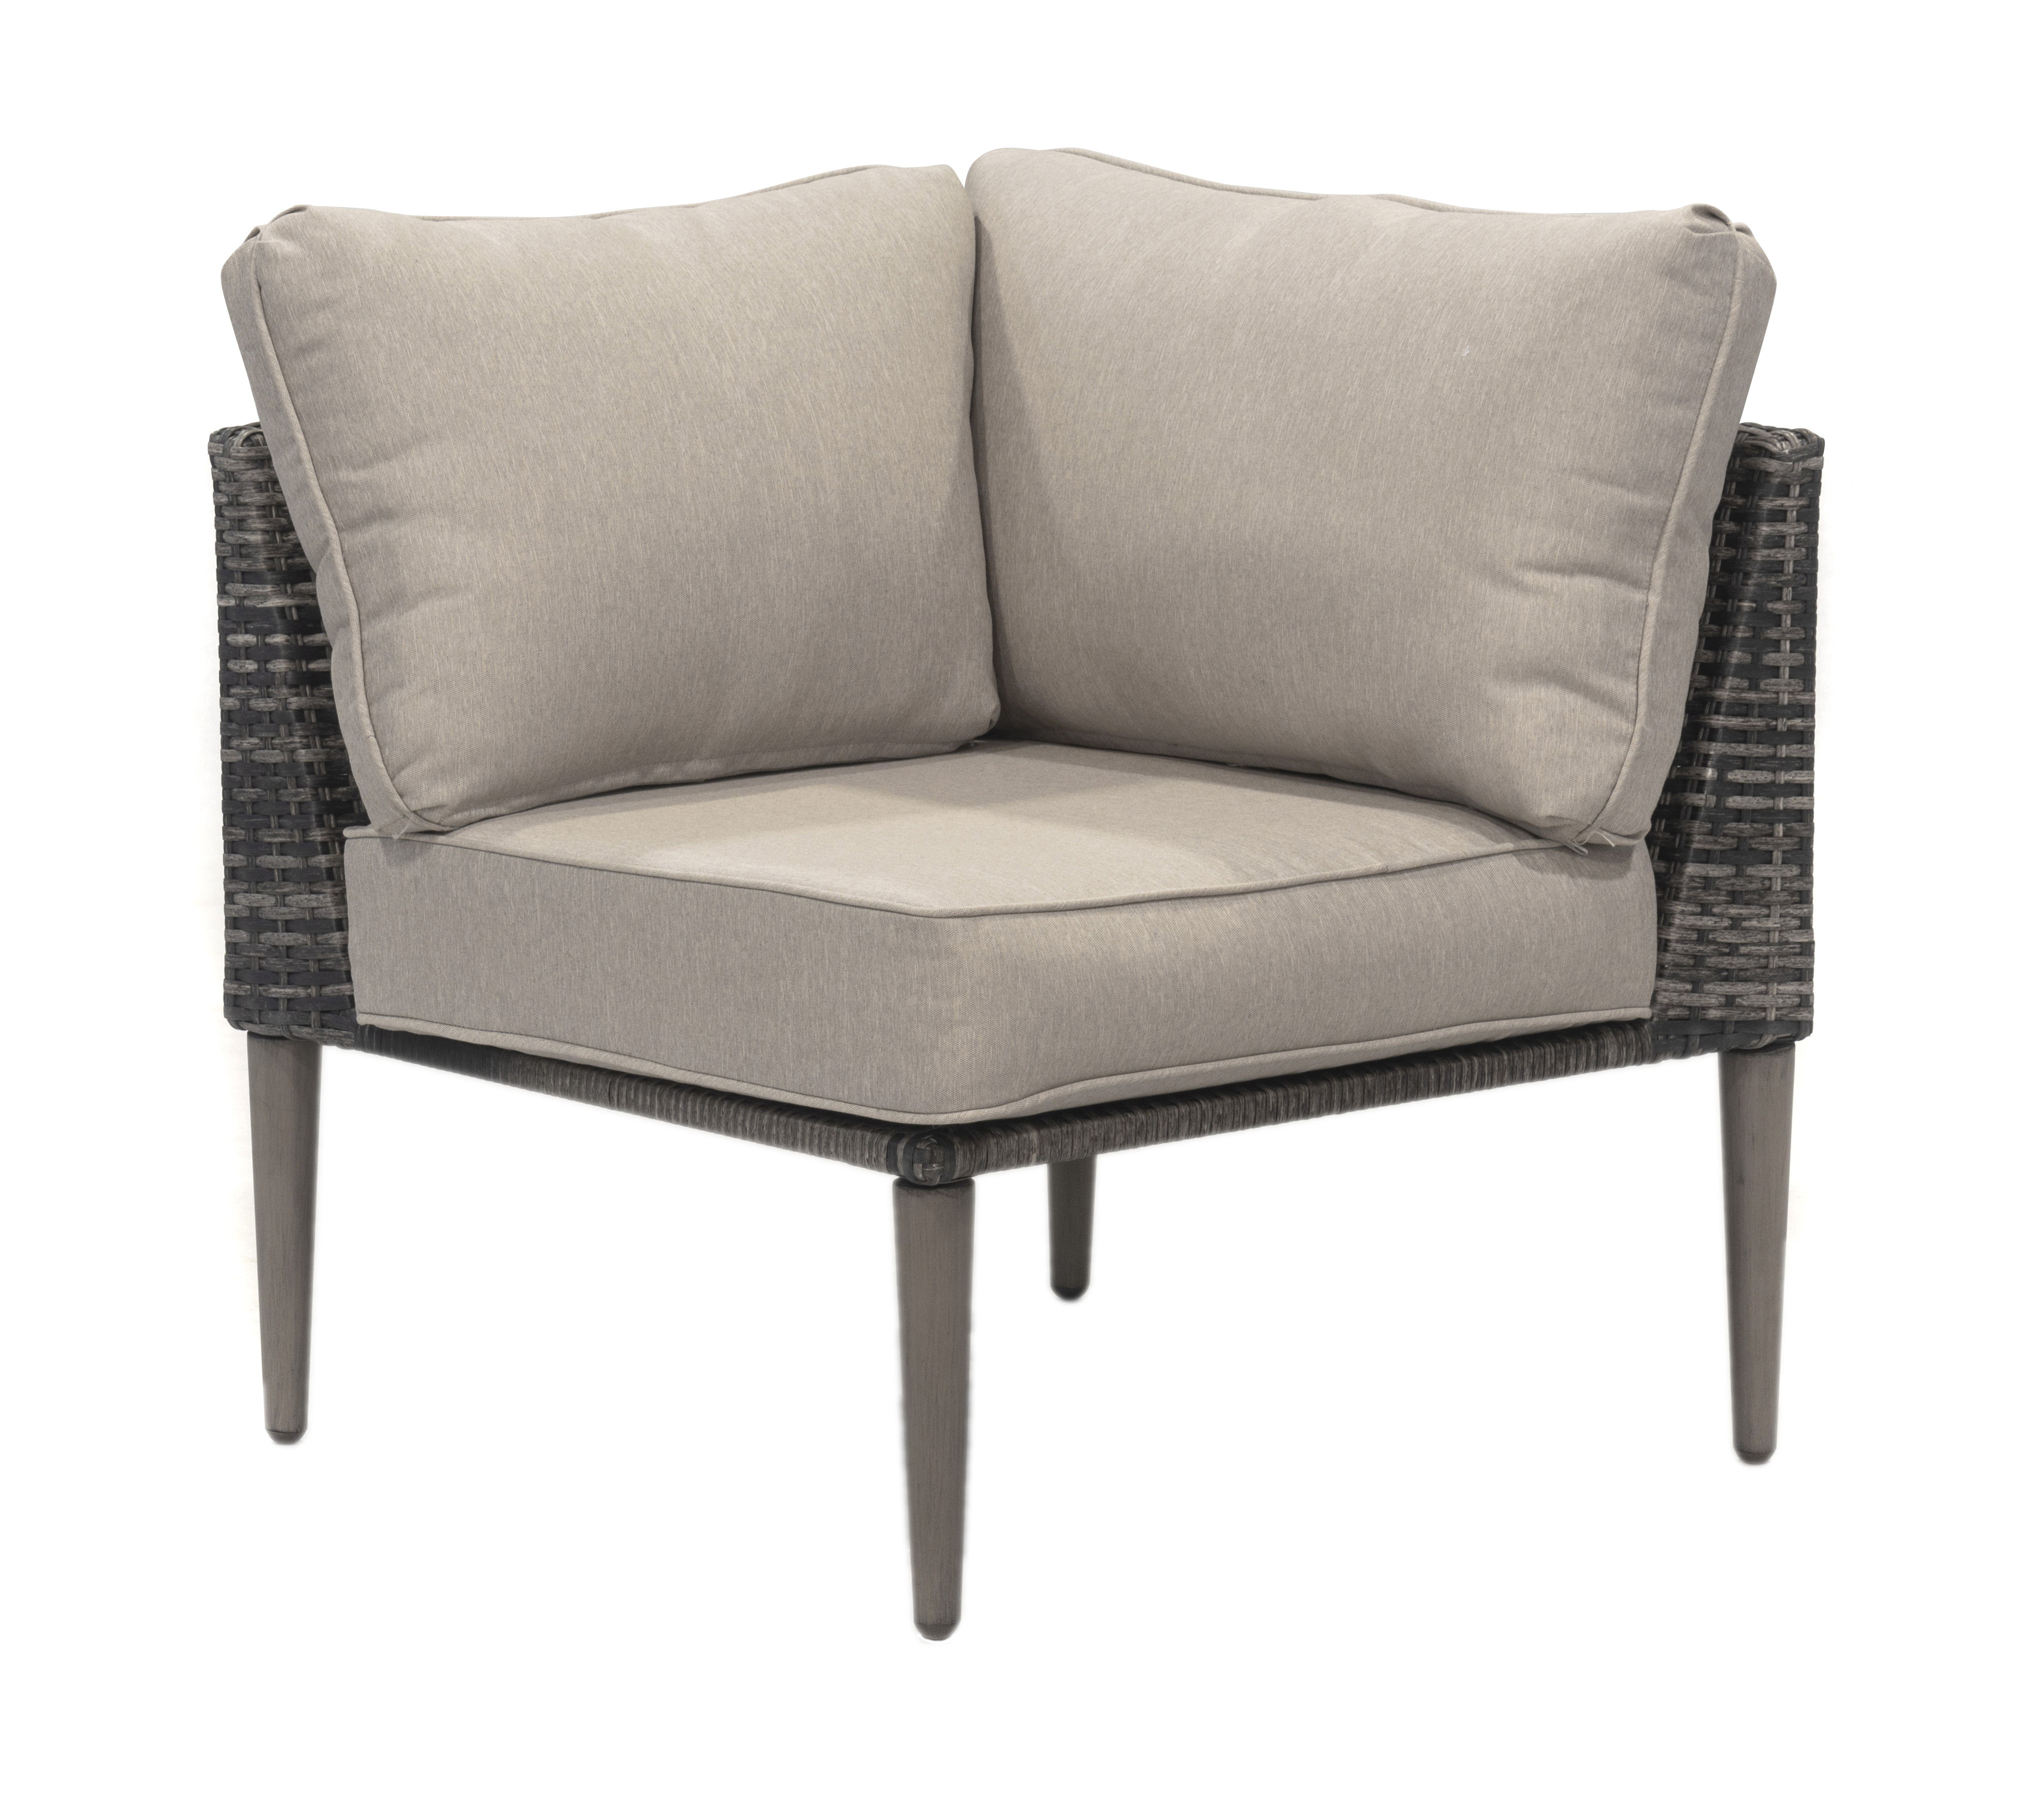 Donglin Outdoor Patio Furniture Sutton Creek 7-Piece Steel Sectional Sofa PE Wicker Rattan Set,Gray - image 13 of 16